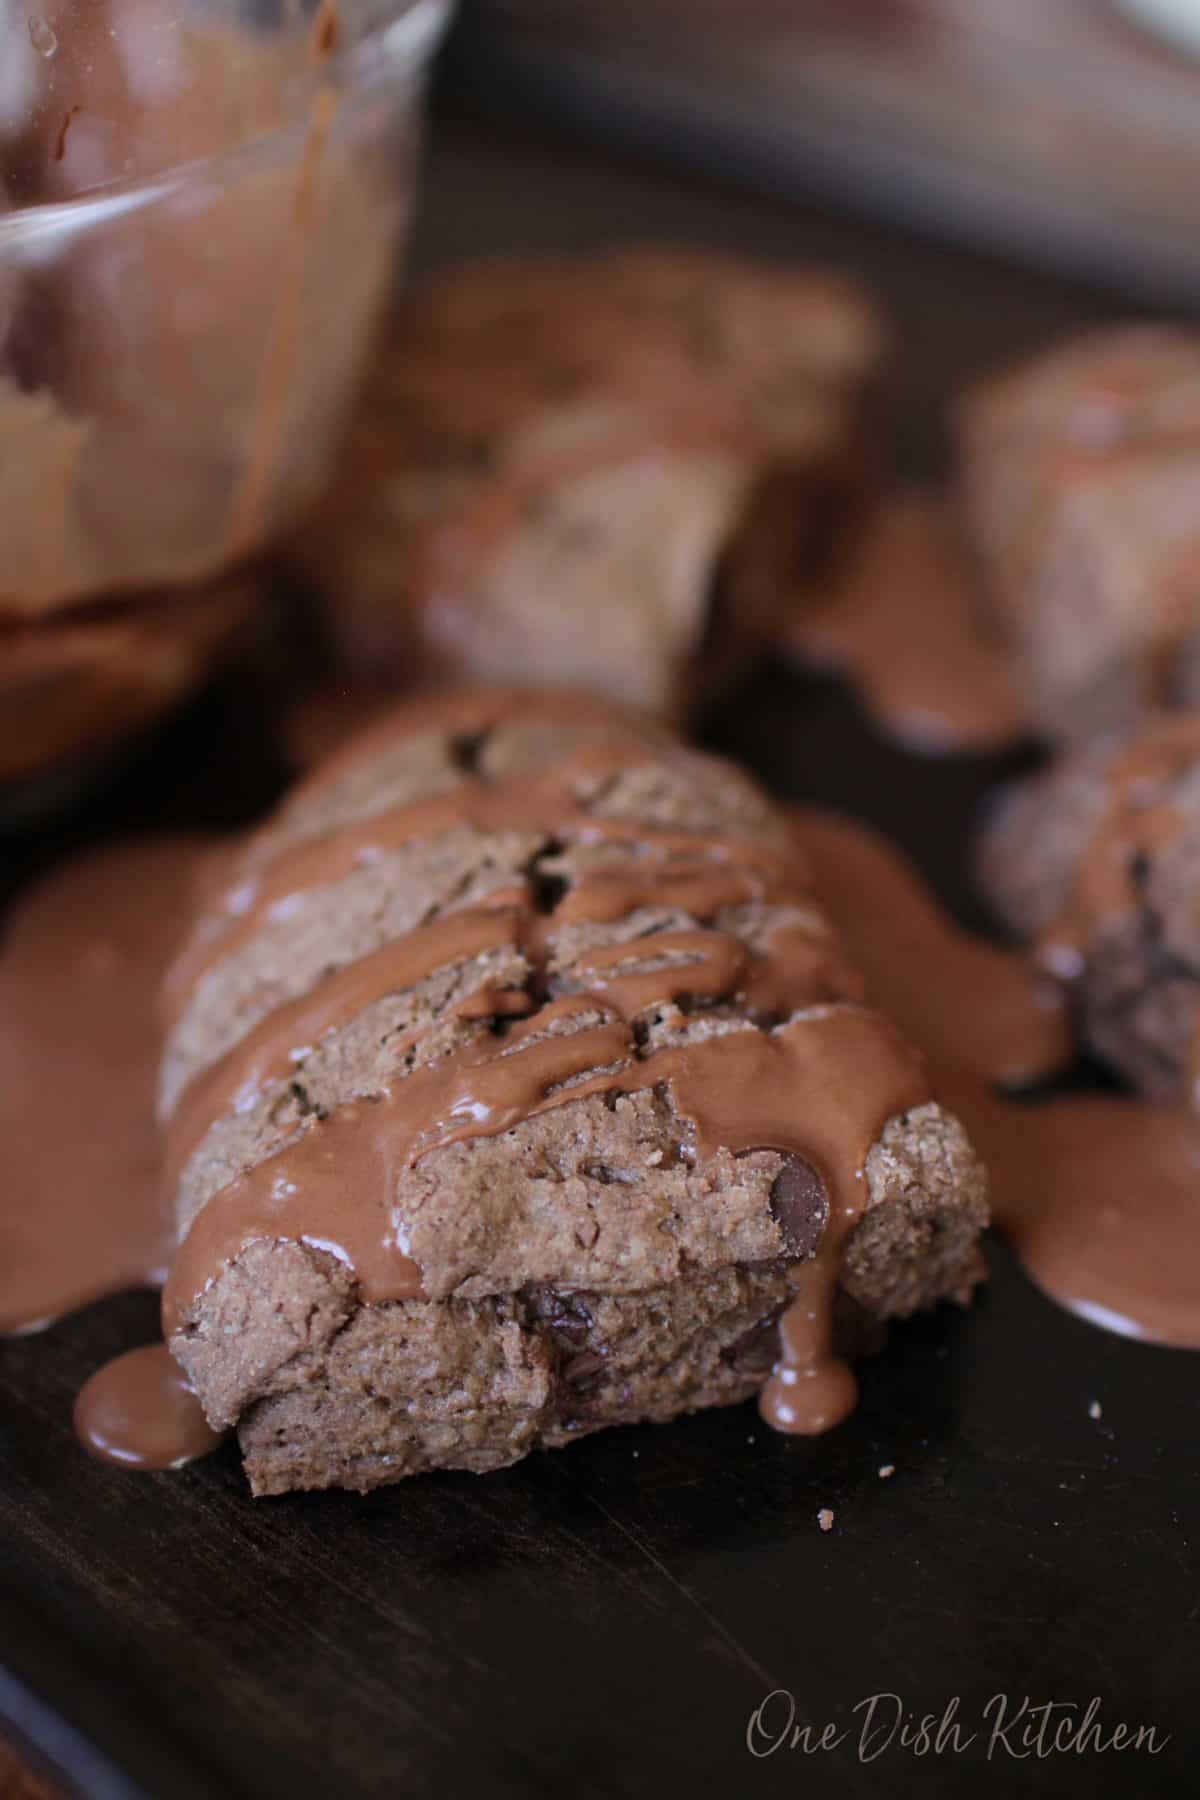 A closeup of a chocolate scone covered with chocolate glaze.